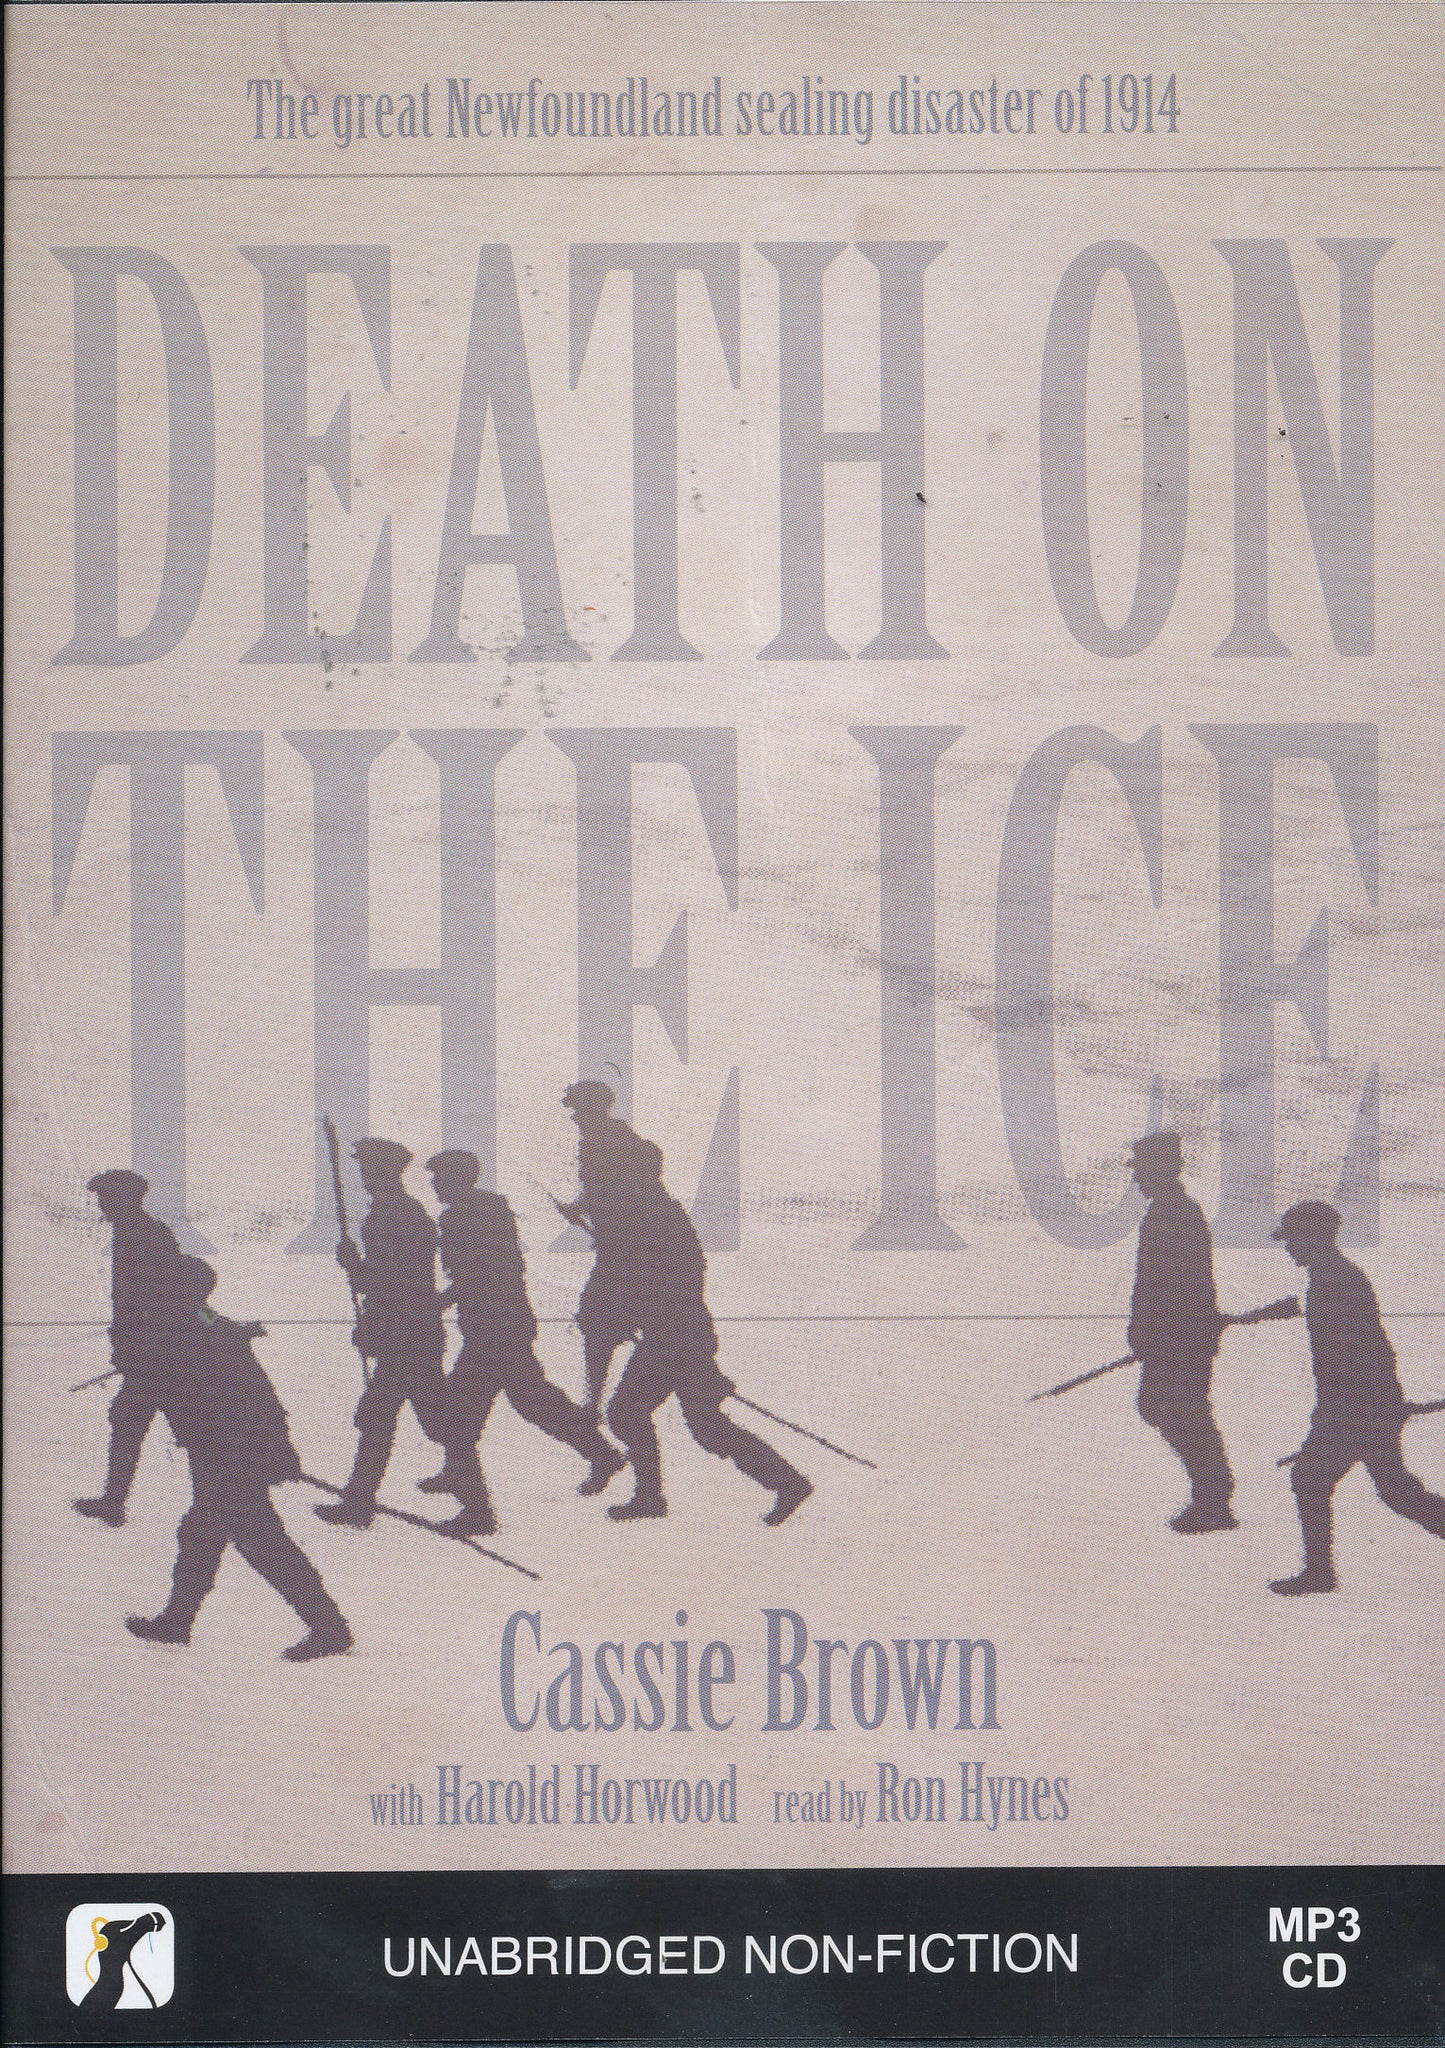 Death on the Ice (audiobook)